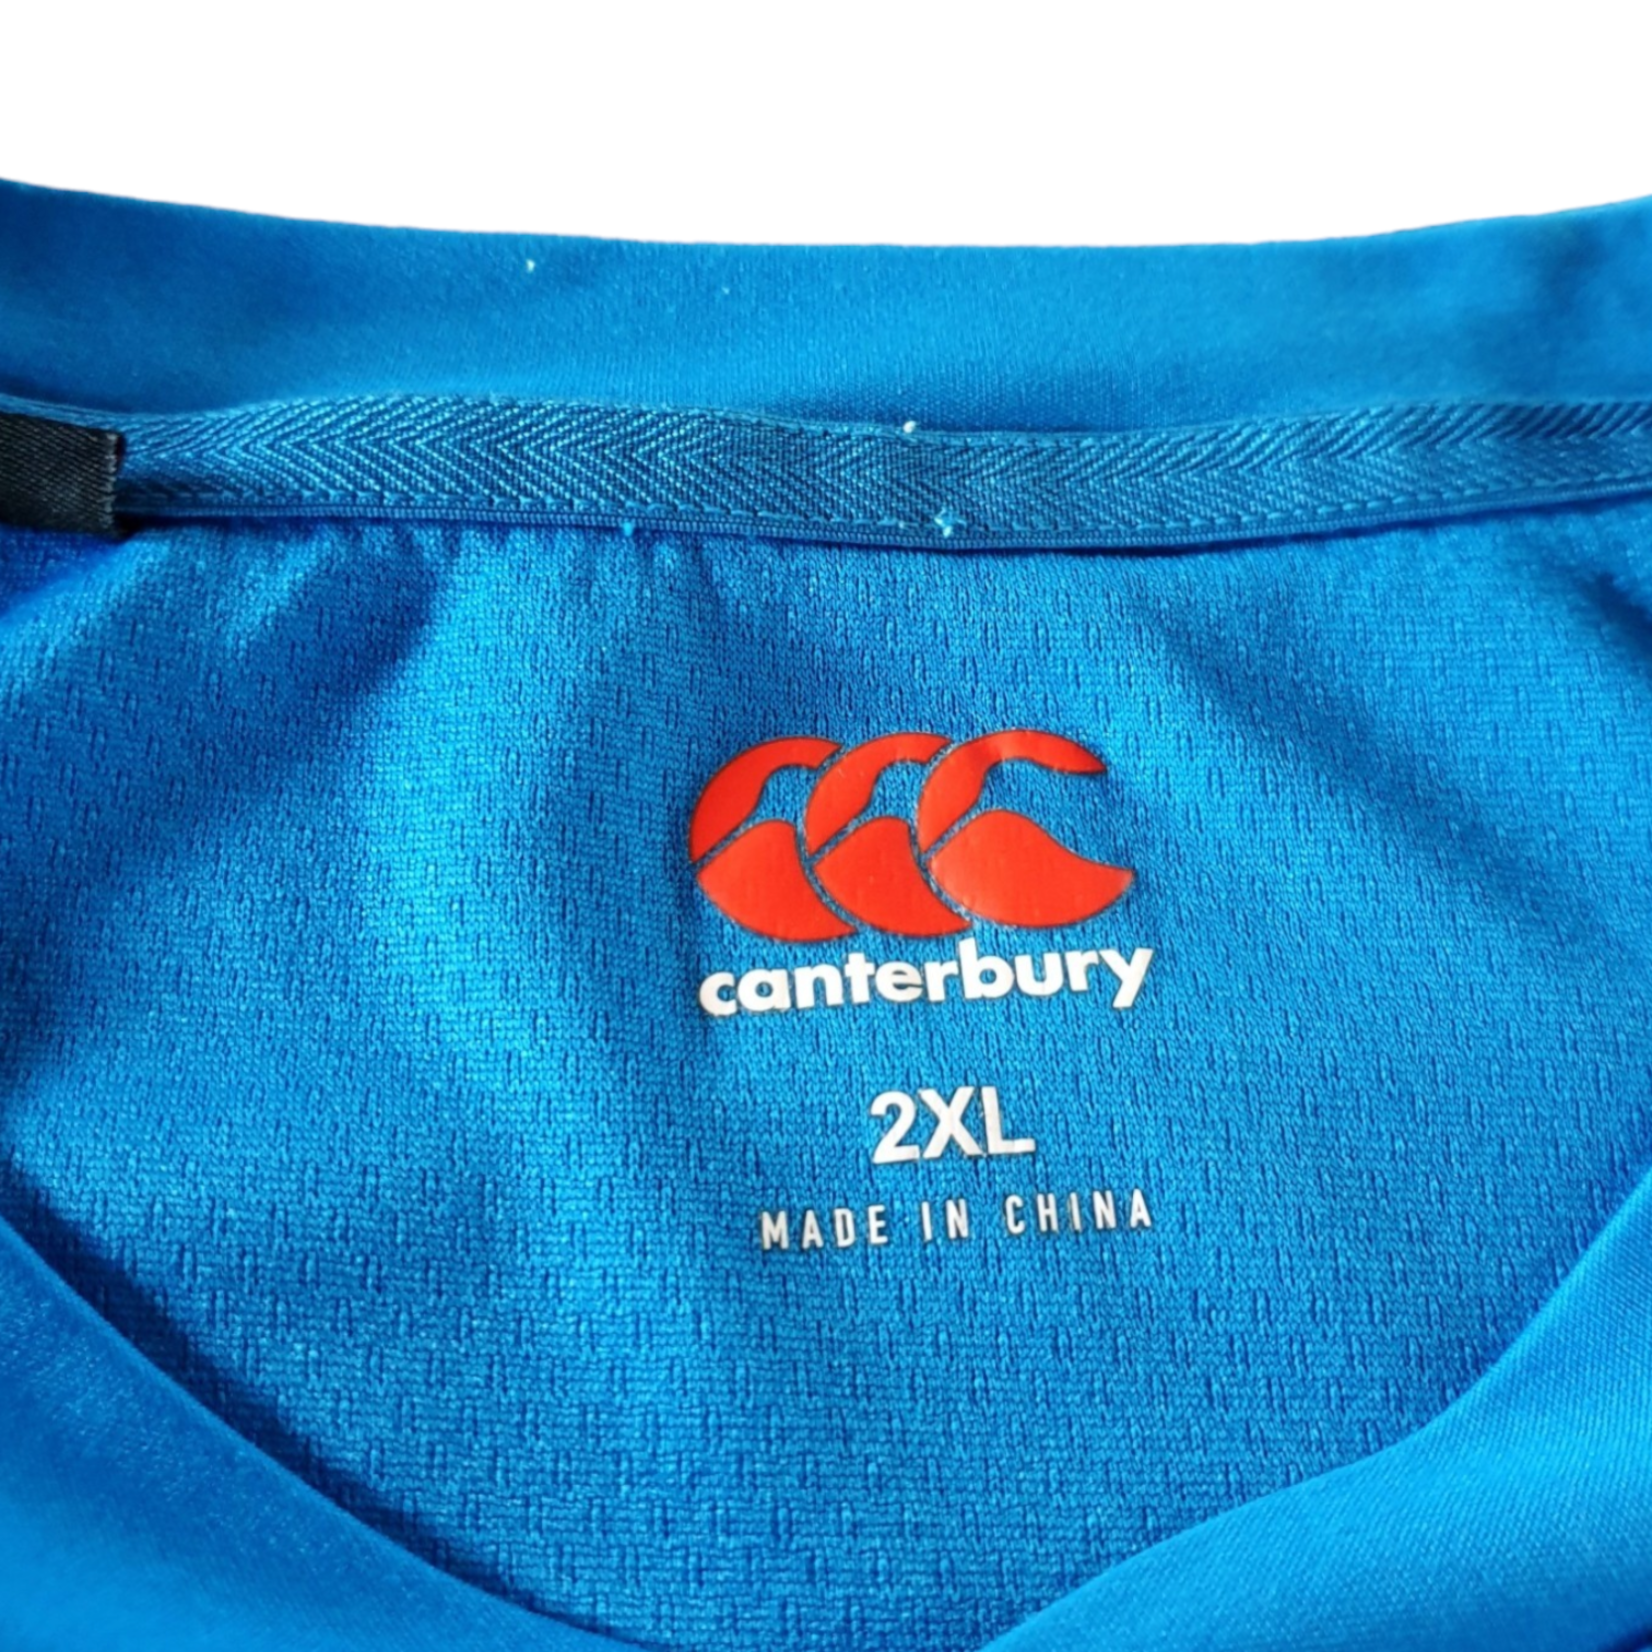 Canterbury Origineel Canterbury vintage rugby shirt Engeland 2018/19